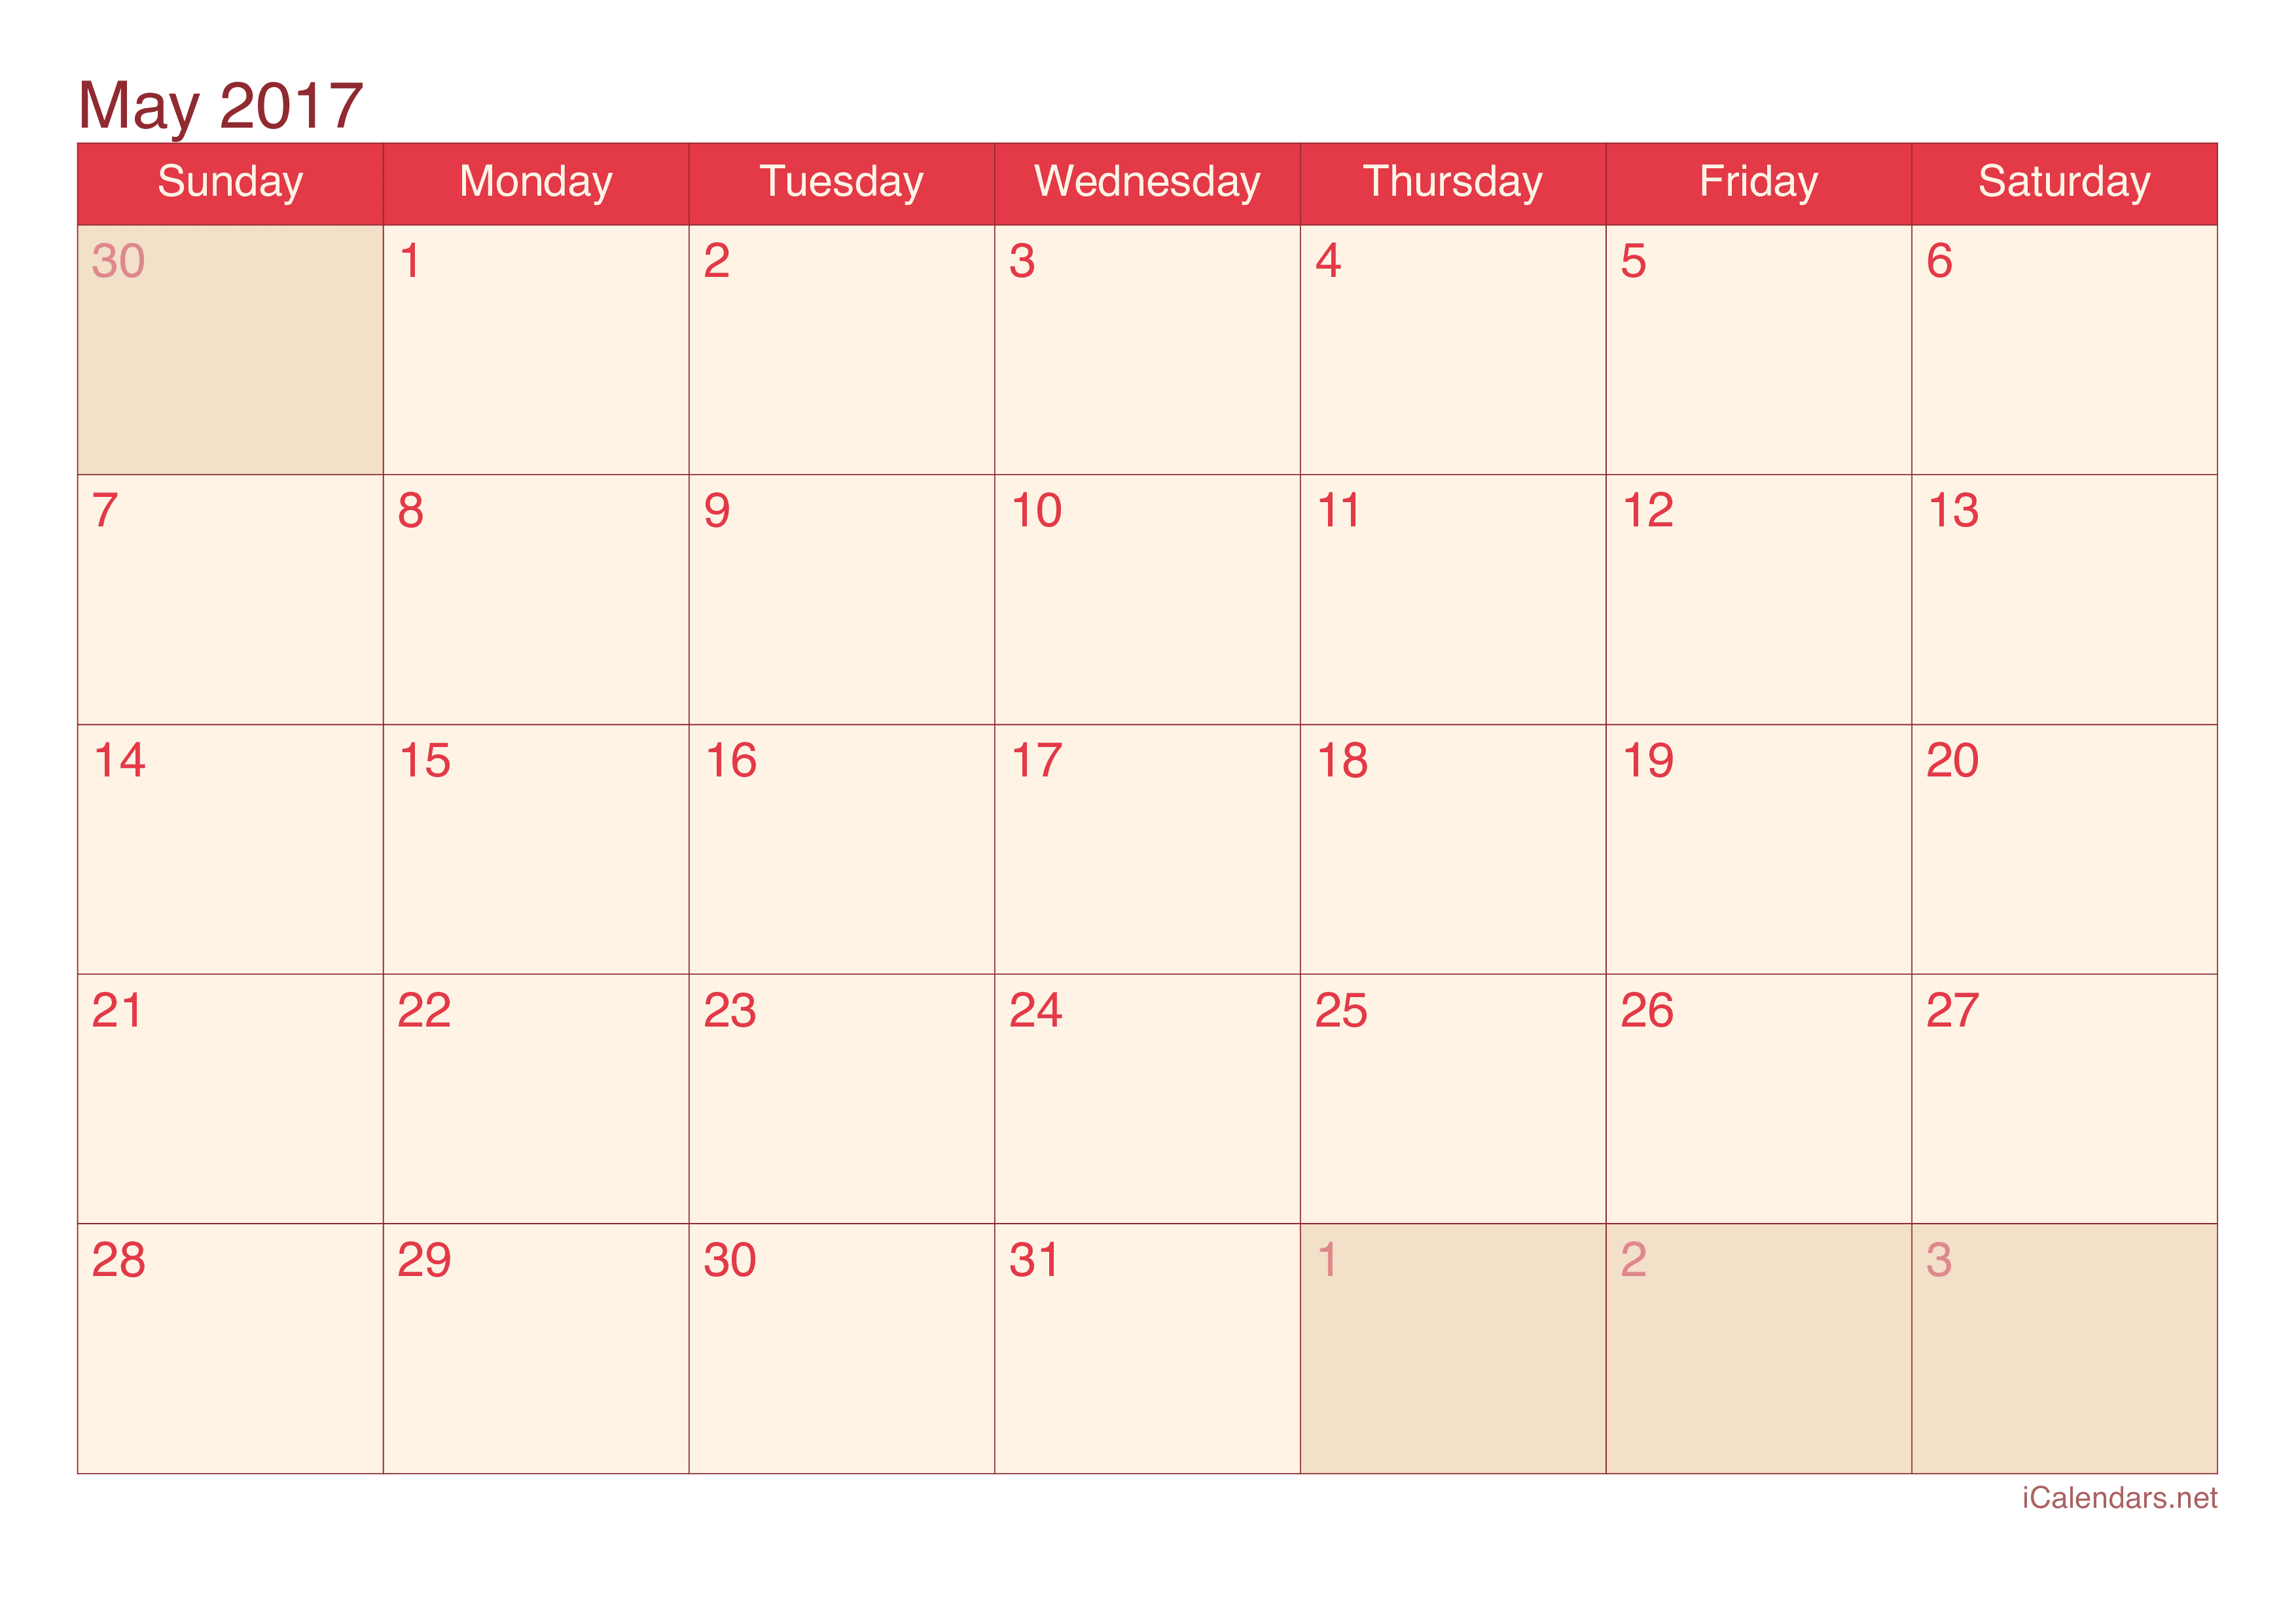 May 2017 Printable Calendar - icalendars.net